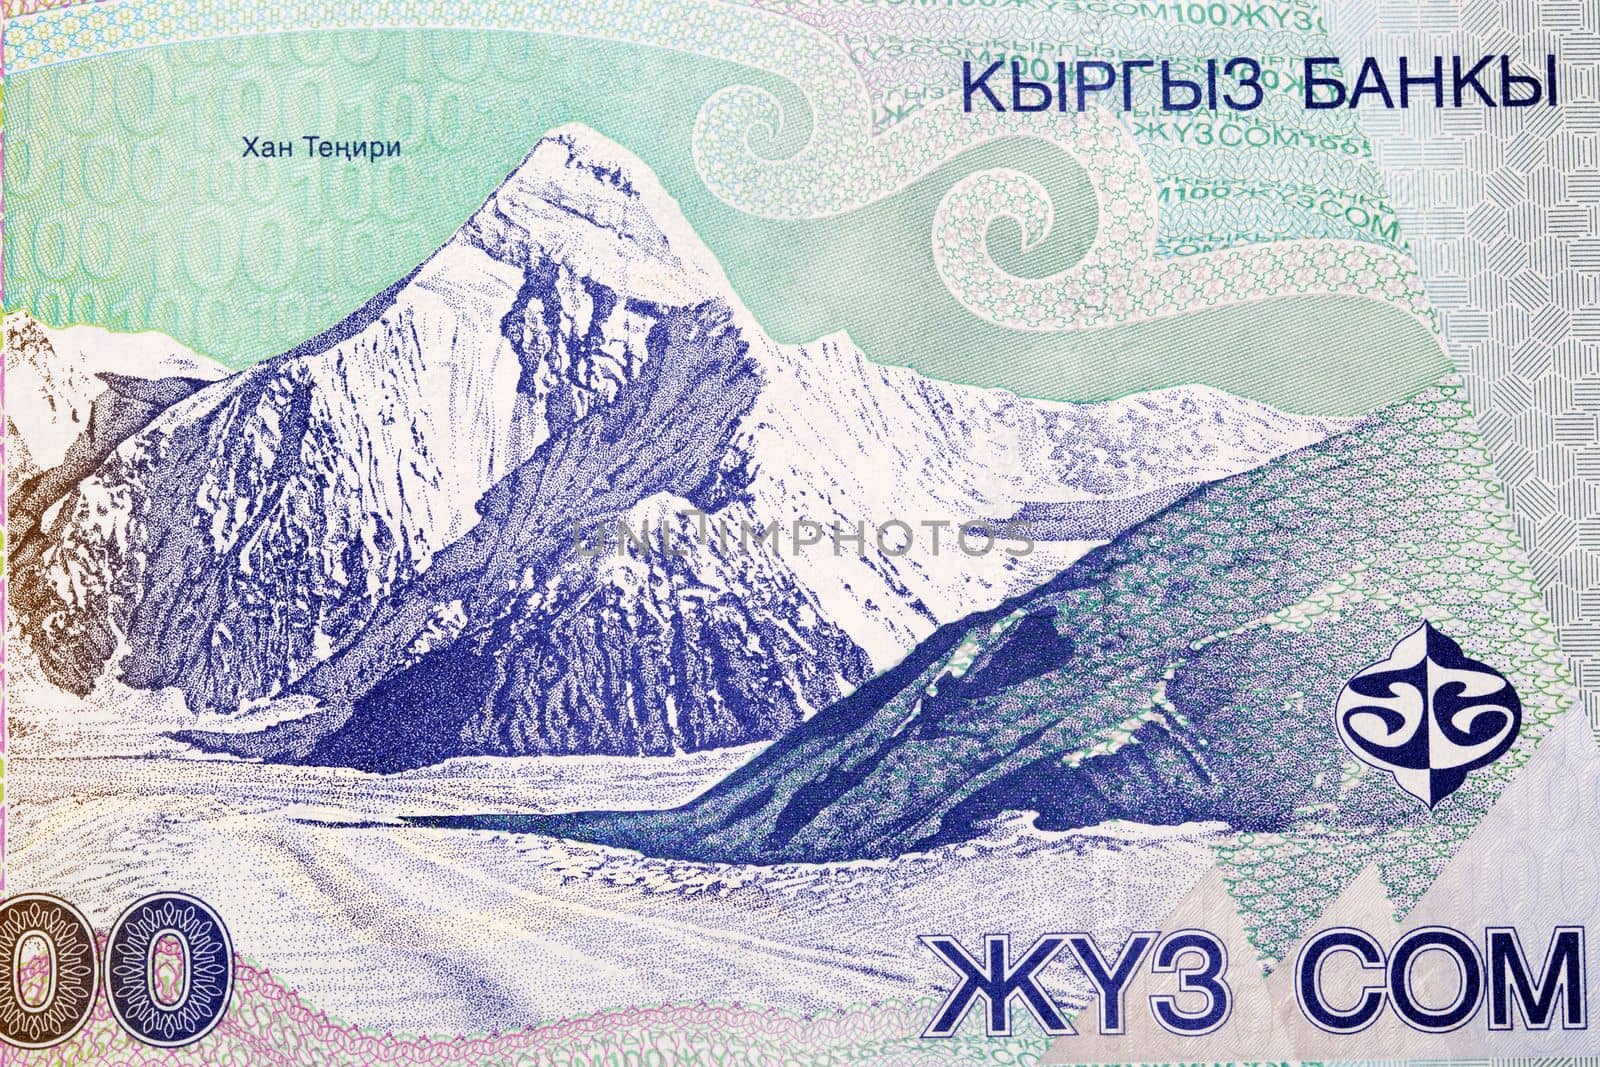 Khan Tengri from Kyrgyzstani money  by johan10